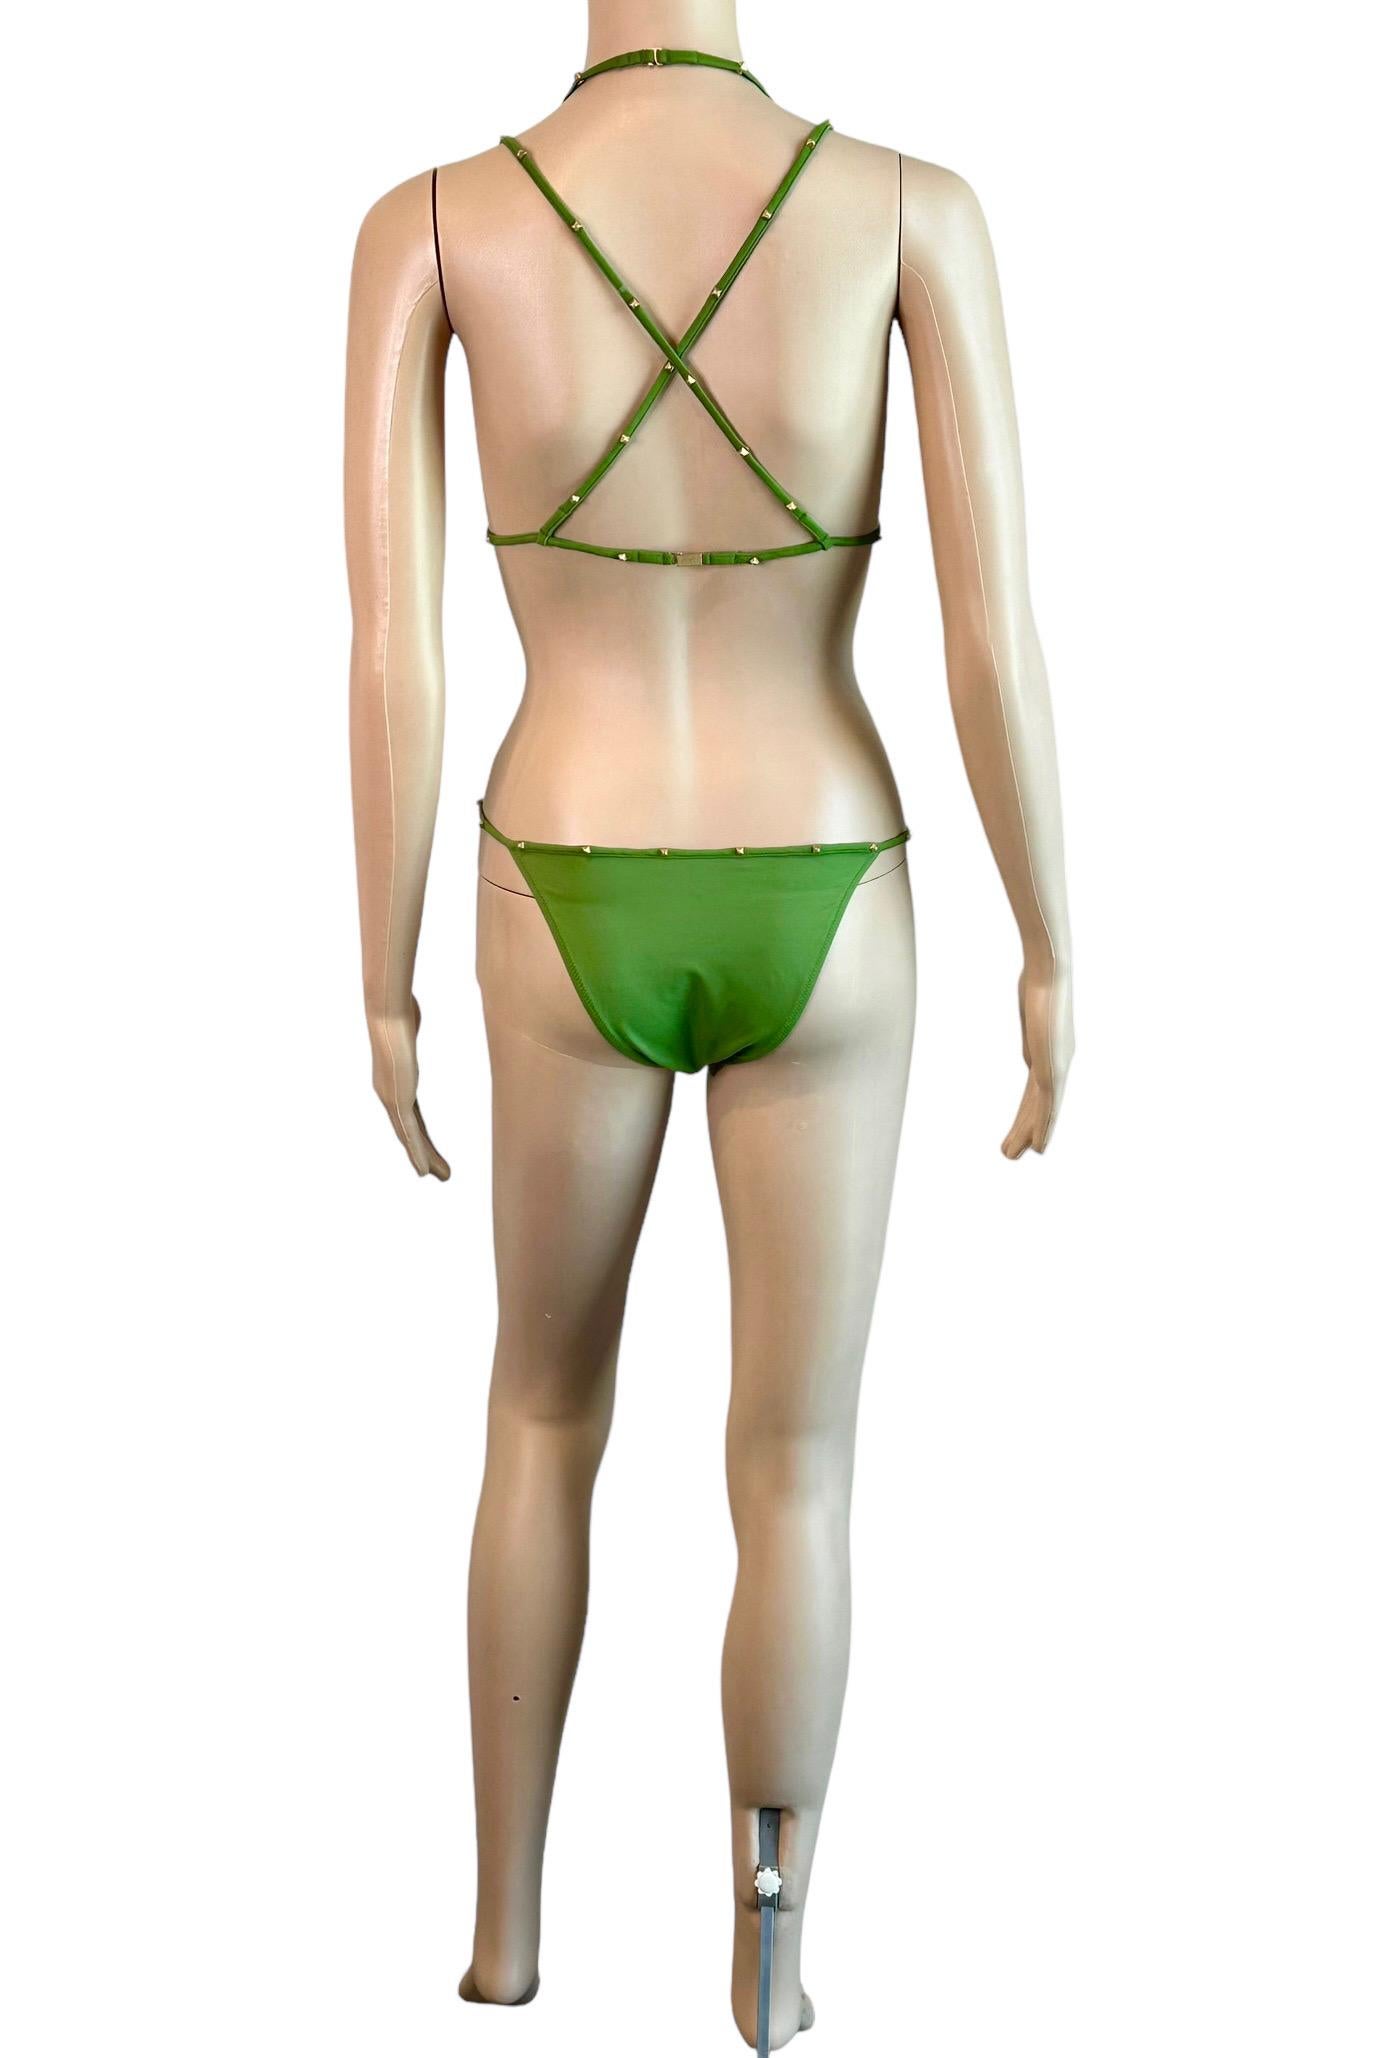 Tom Ford for Gucci F/W 2003 Bondage Studded Two-Piece Bikini Swimsuit Swimwear For Sale 2